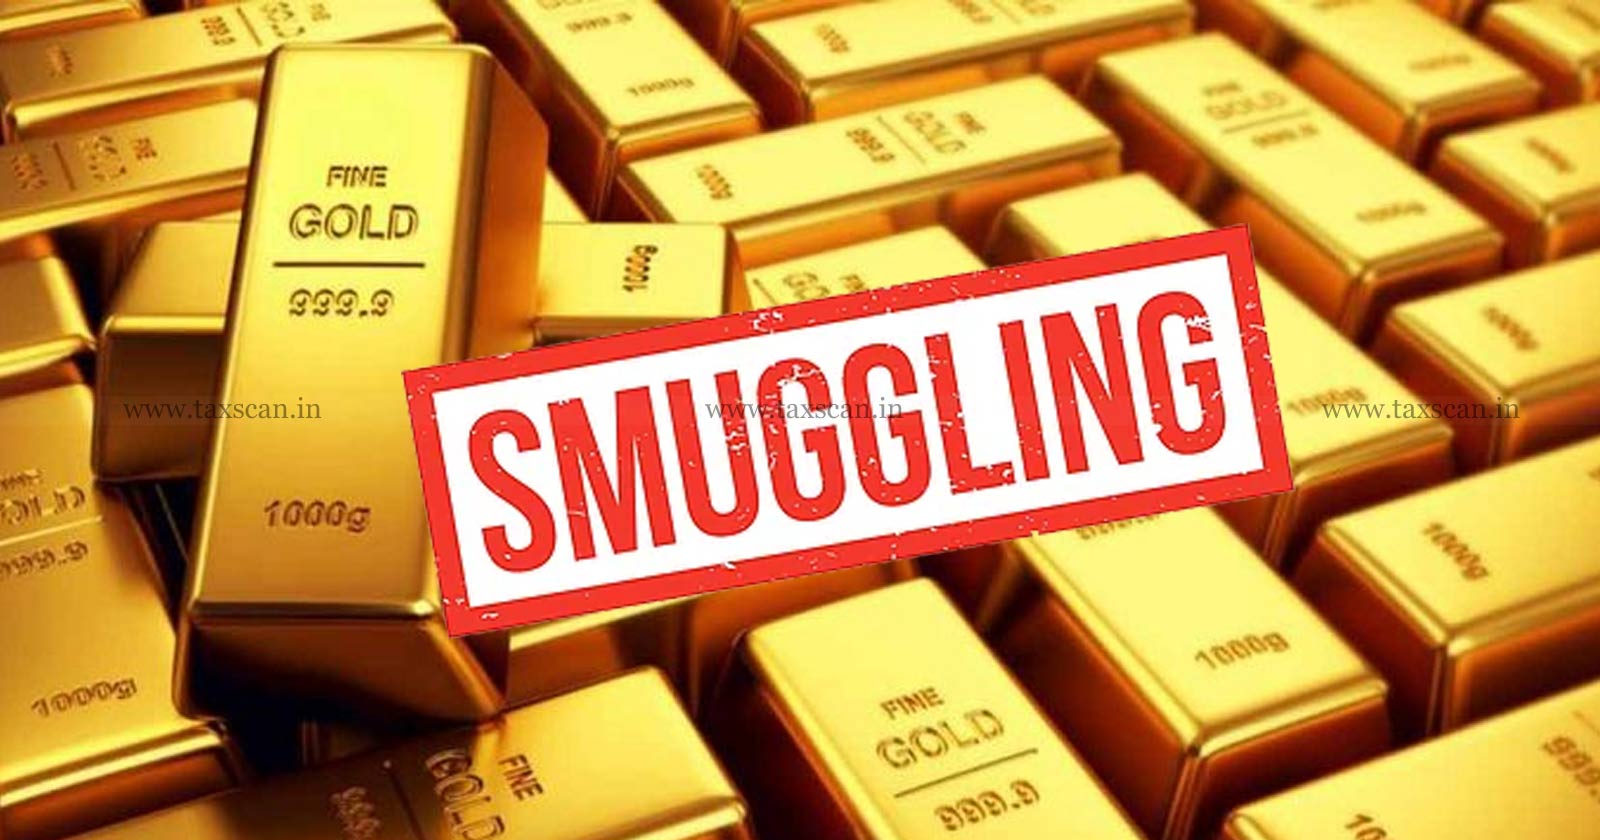 CESTAT - Confiscation of Mercedes Car - Mercedes Car - Smuggling of Gold Bar - Gold Bar - Smuggling - taxscan